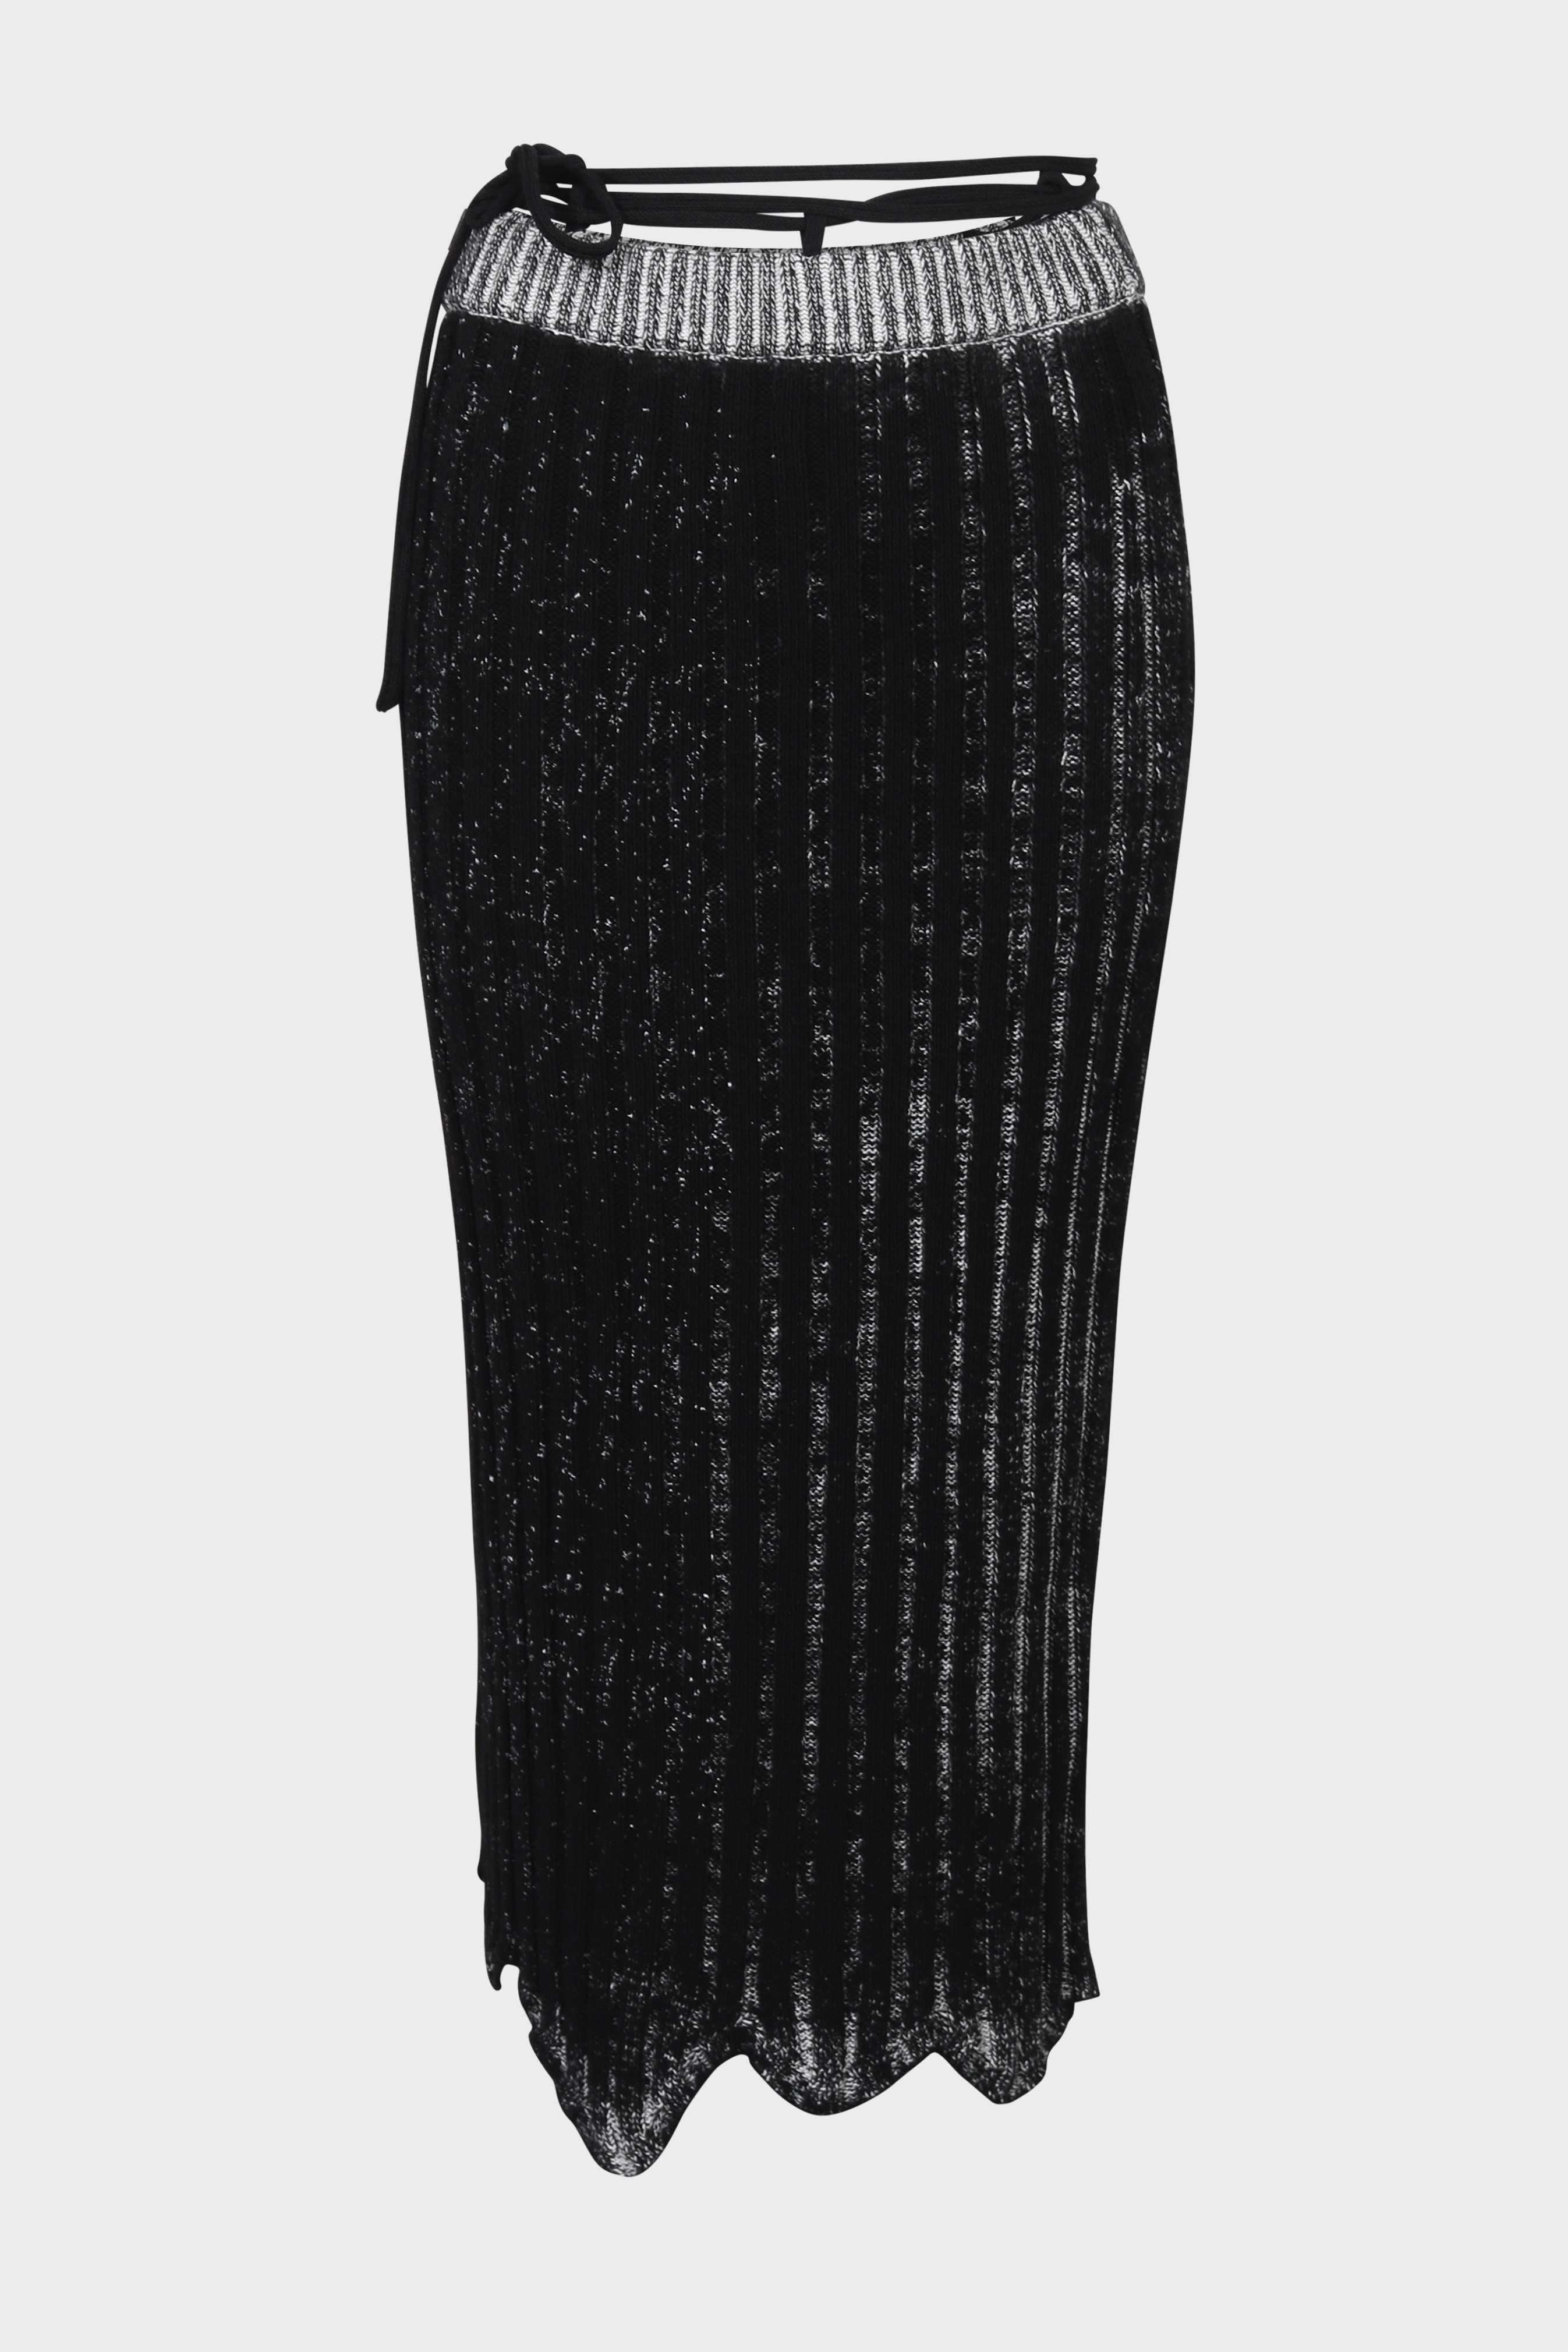 ACNE STUDIOS Knit Skirt in Black/White